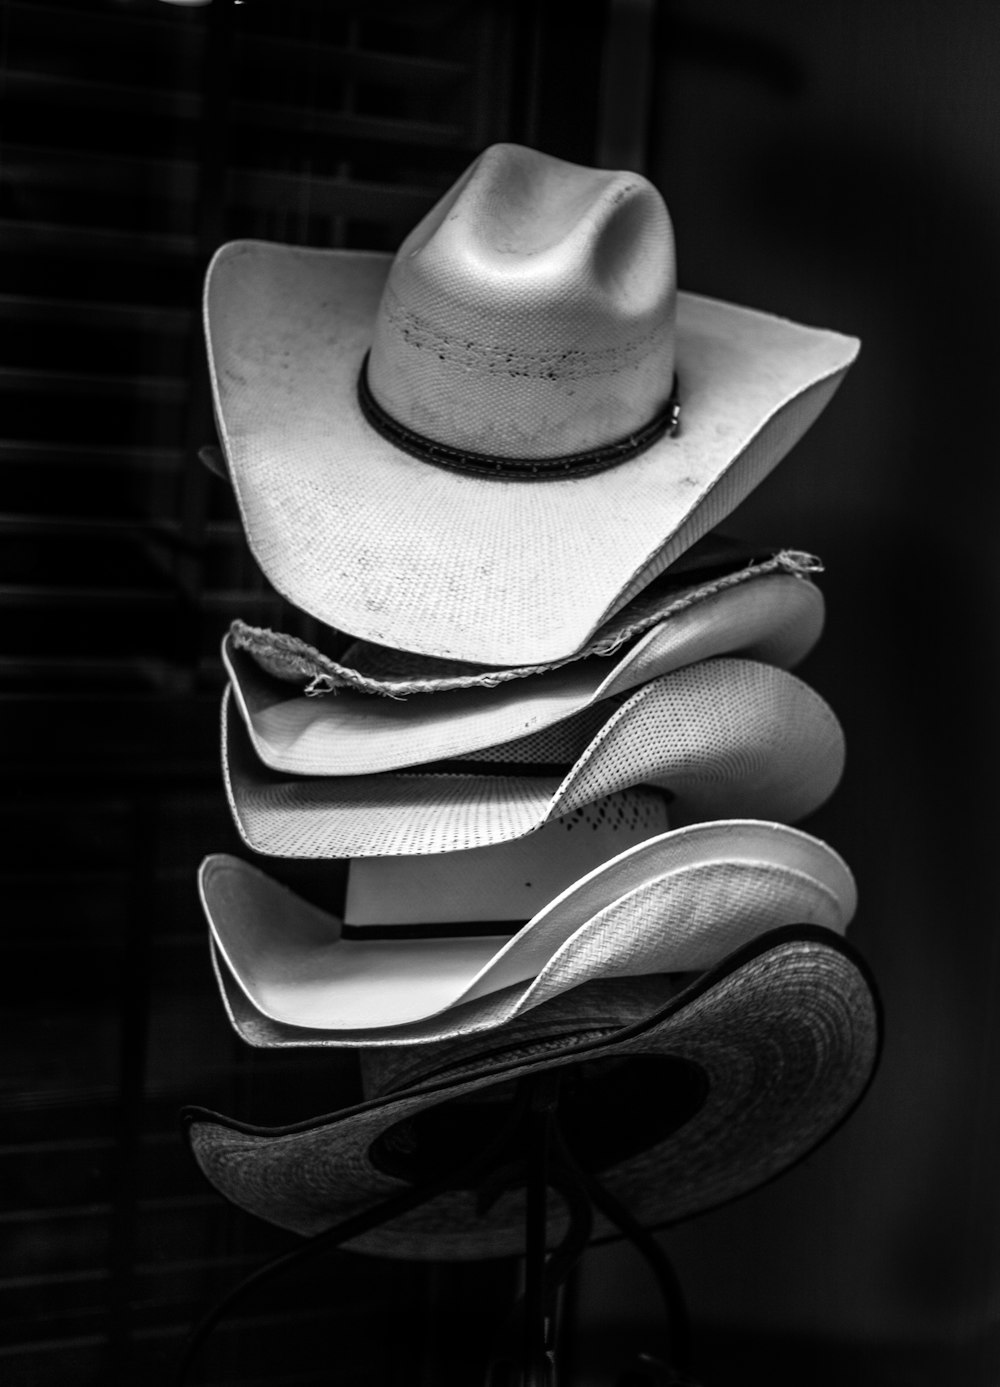 fotografia em tons de cinza de chapéus de cowboy empilhados